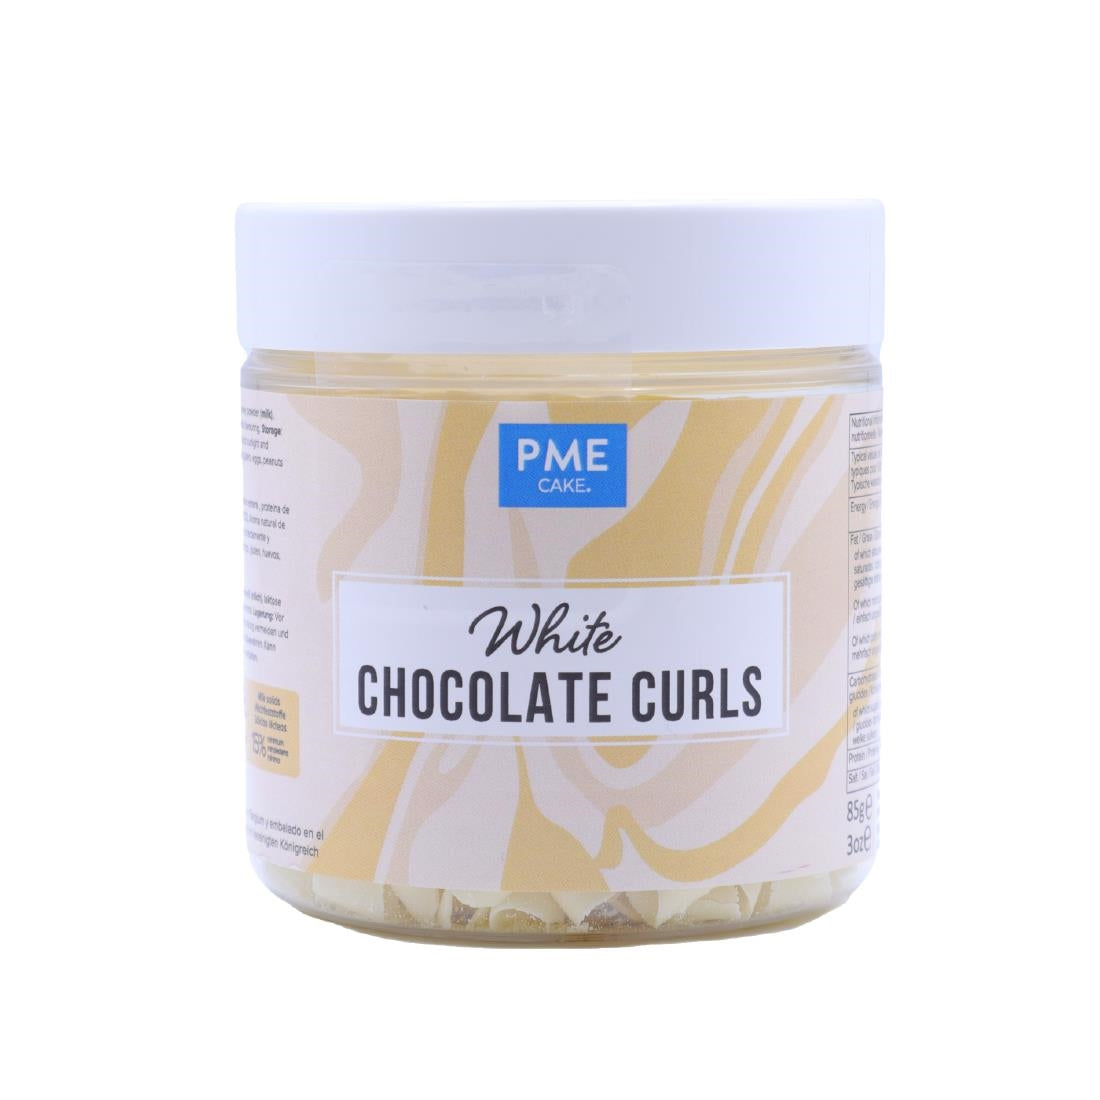 HU283 PME Chocolate Curls White Chocolate 85g